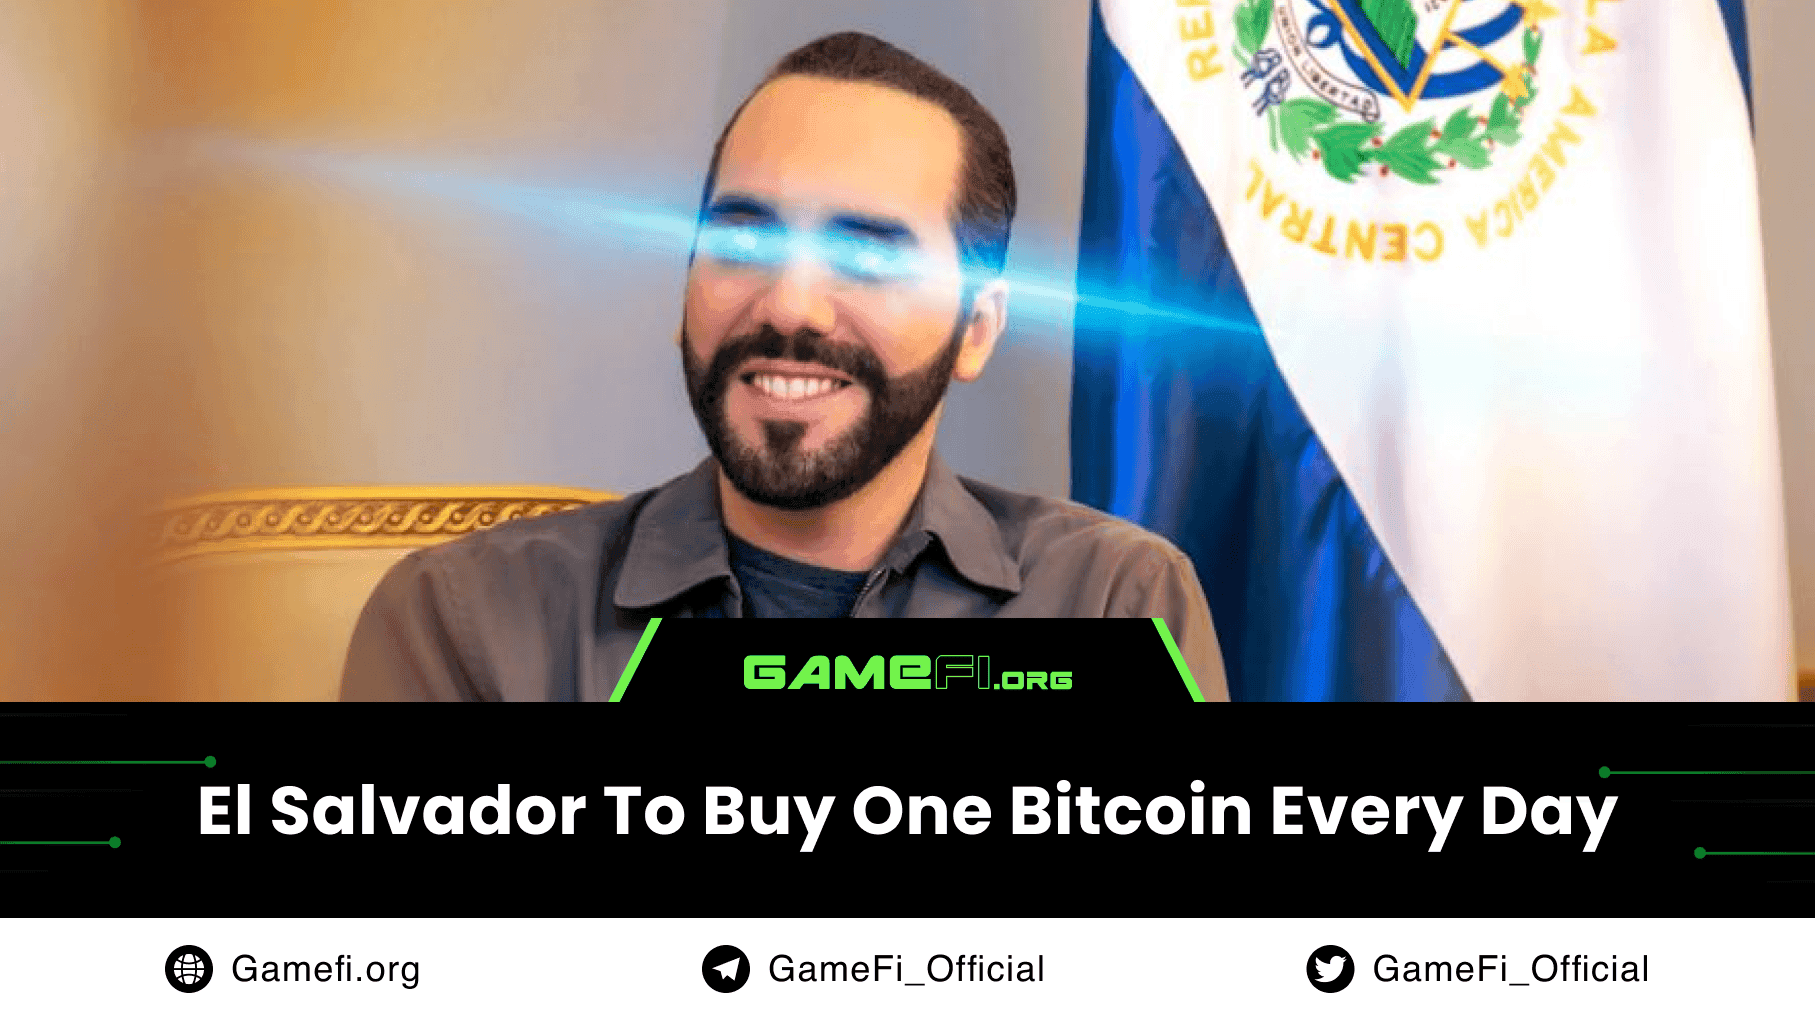 El Salvador's President Nayib Bukele and Tron's Justin Sun to Buy One Bitcoin Every Day